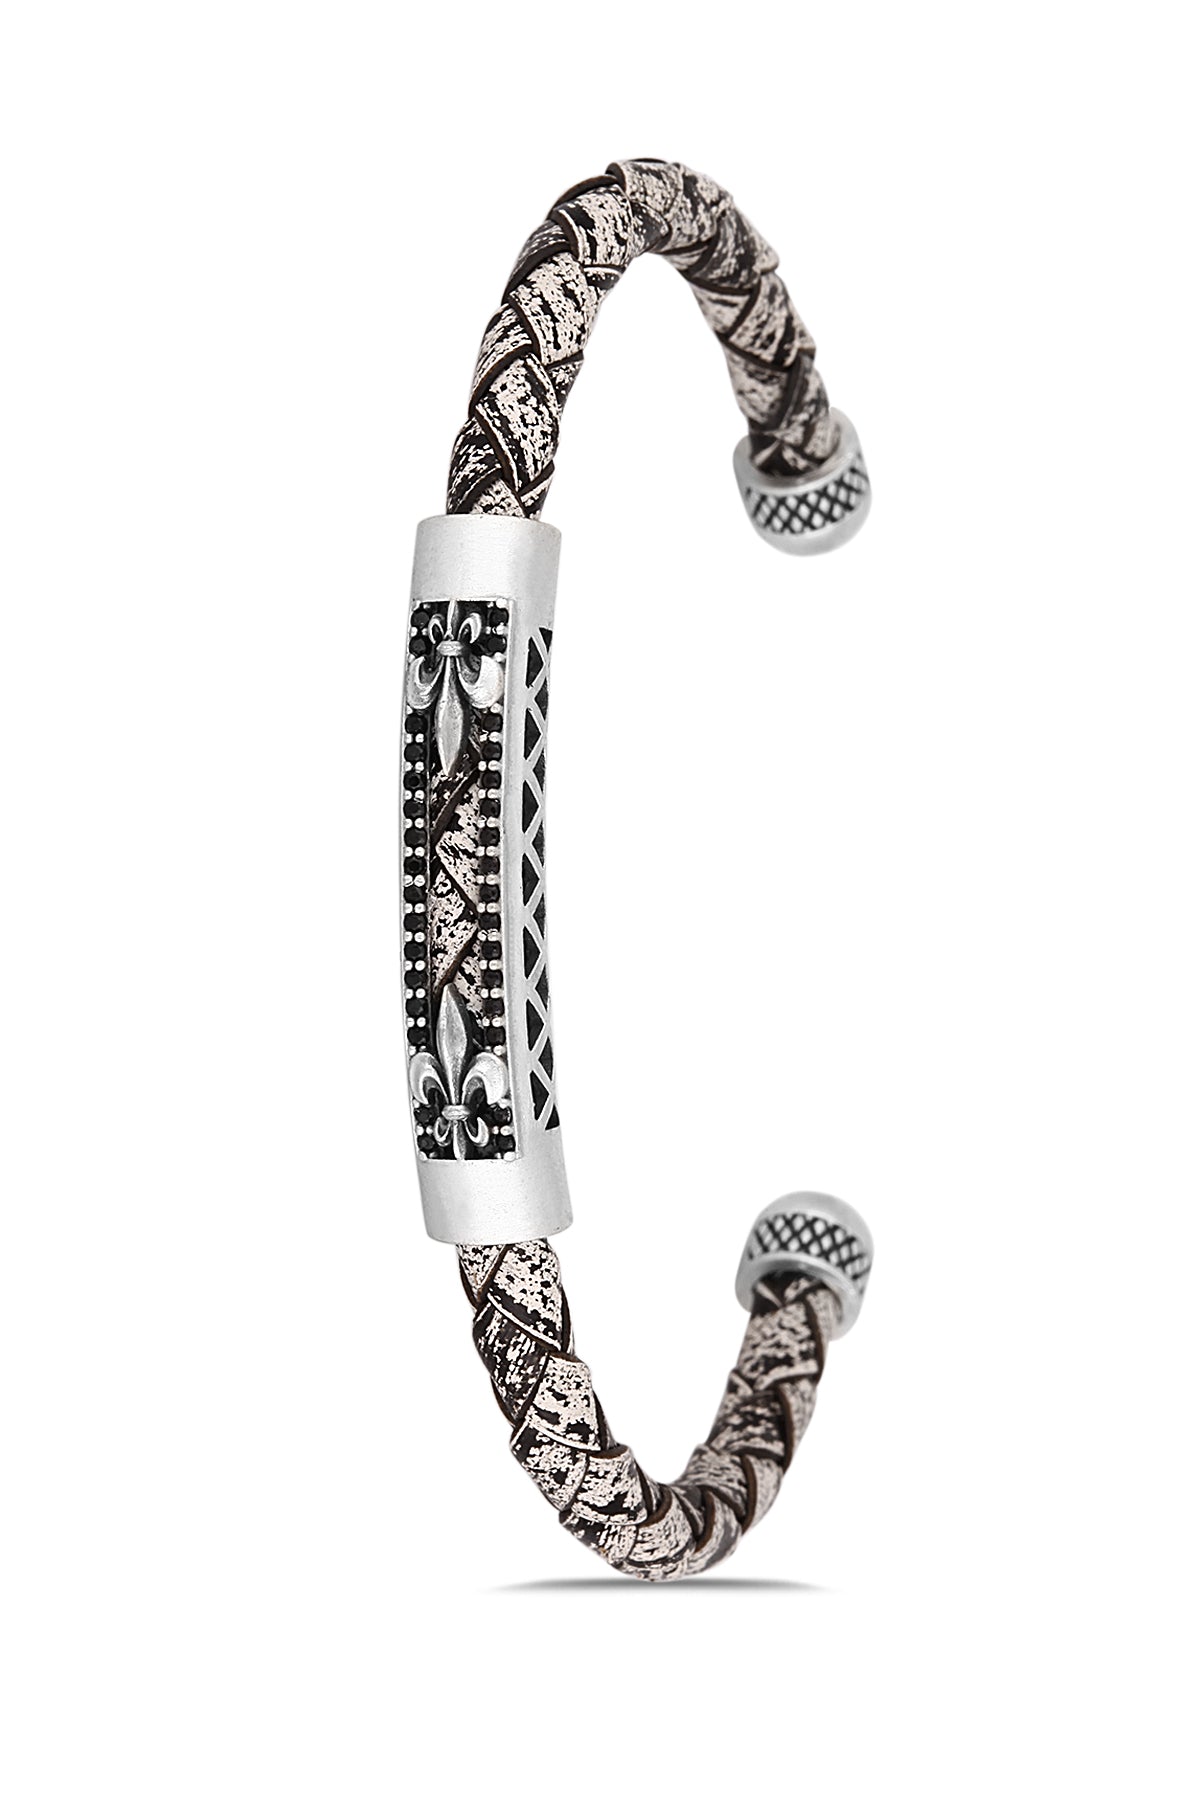 ochtendgloren visie pijp Cheetah concept - Vindex -uniek design - exclusieve heren armband - ar –  cheetahconcept